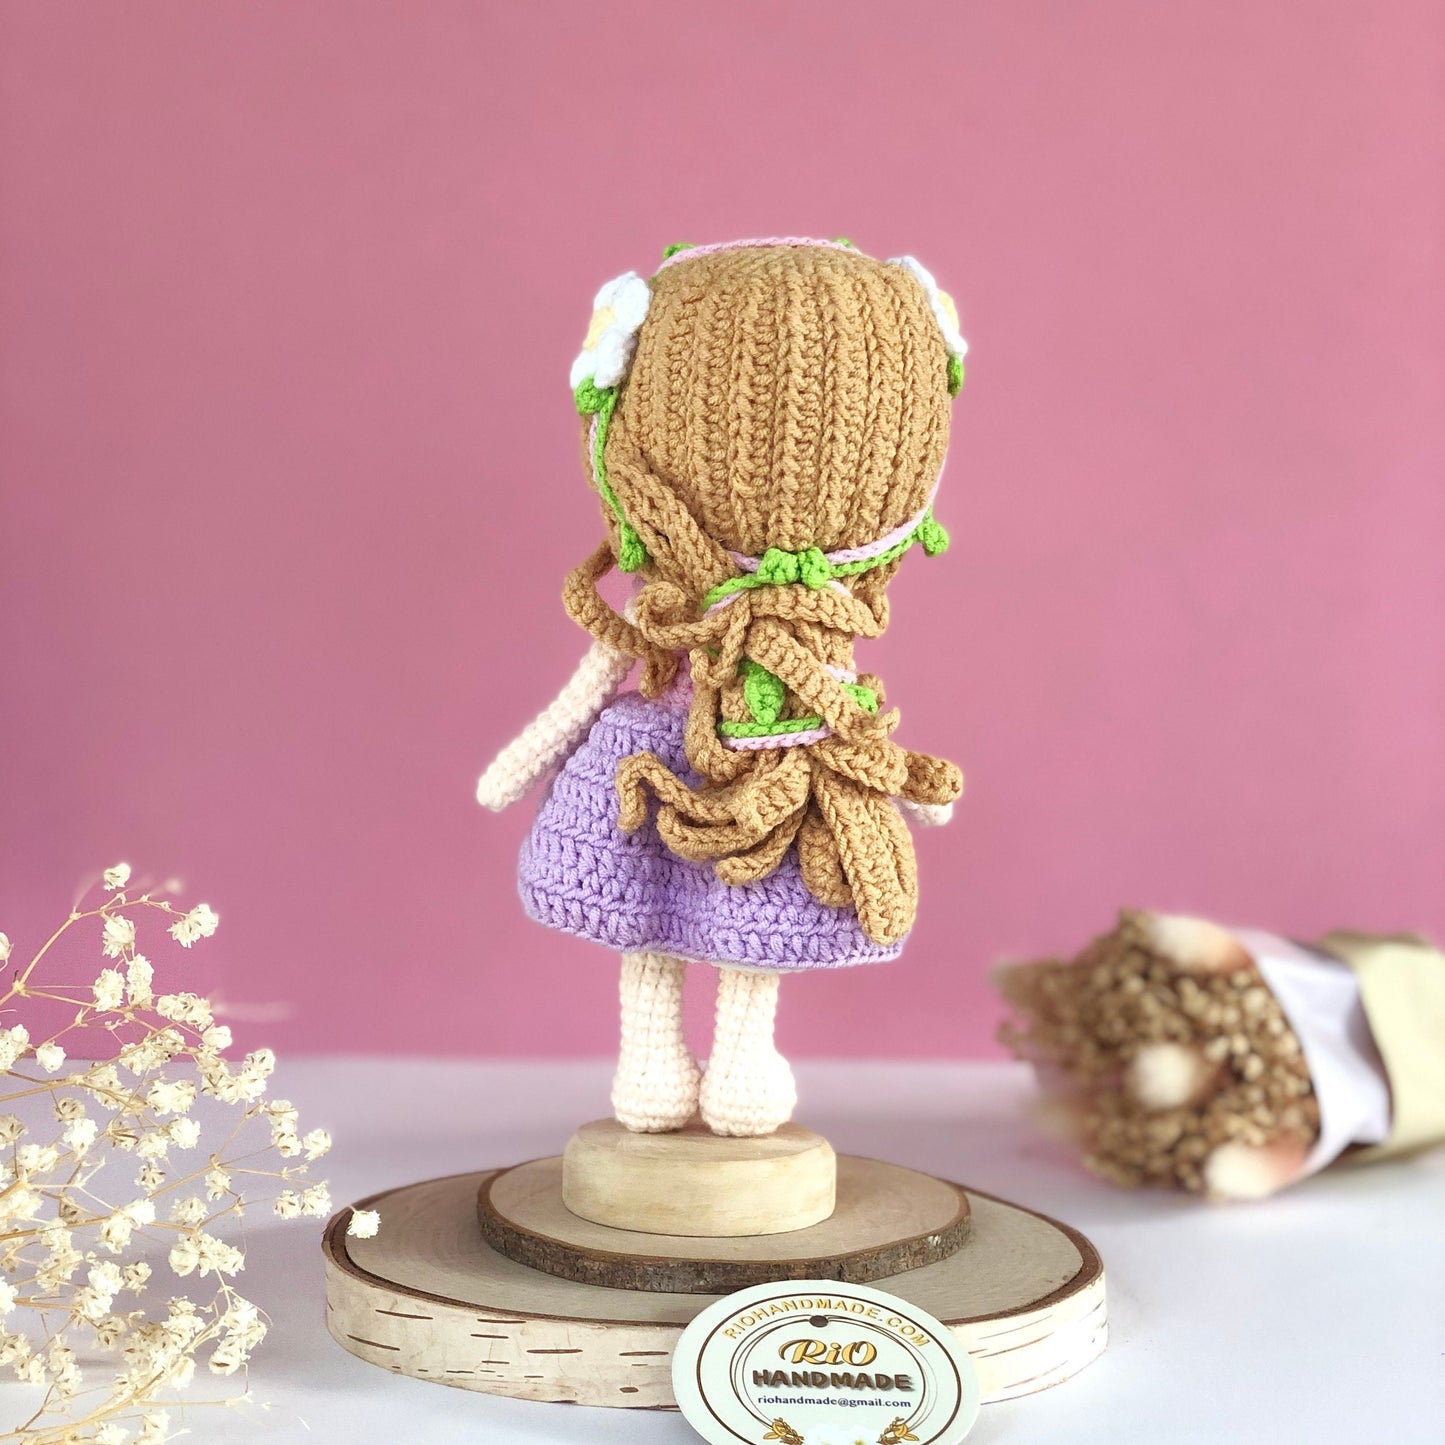 Handmade Princess Inspired Doll Crochet, Cloudy Hair Princess, Amigurumi Princess Doll